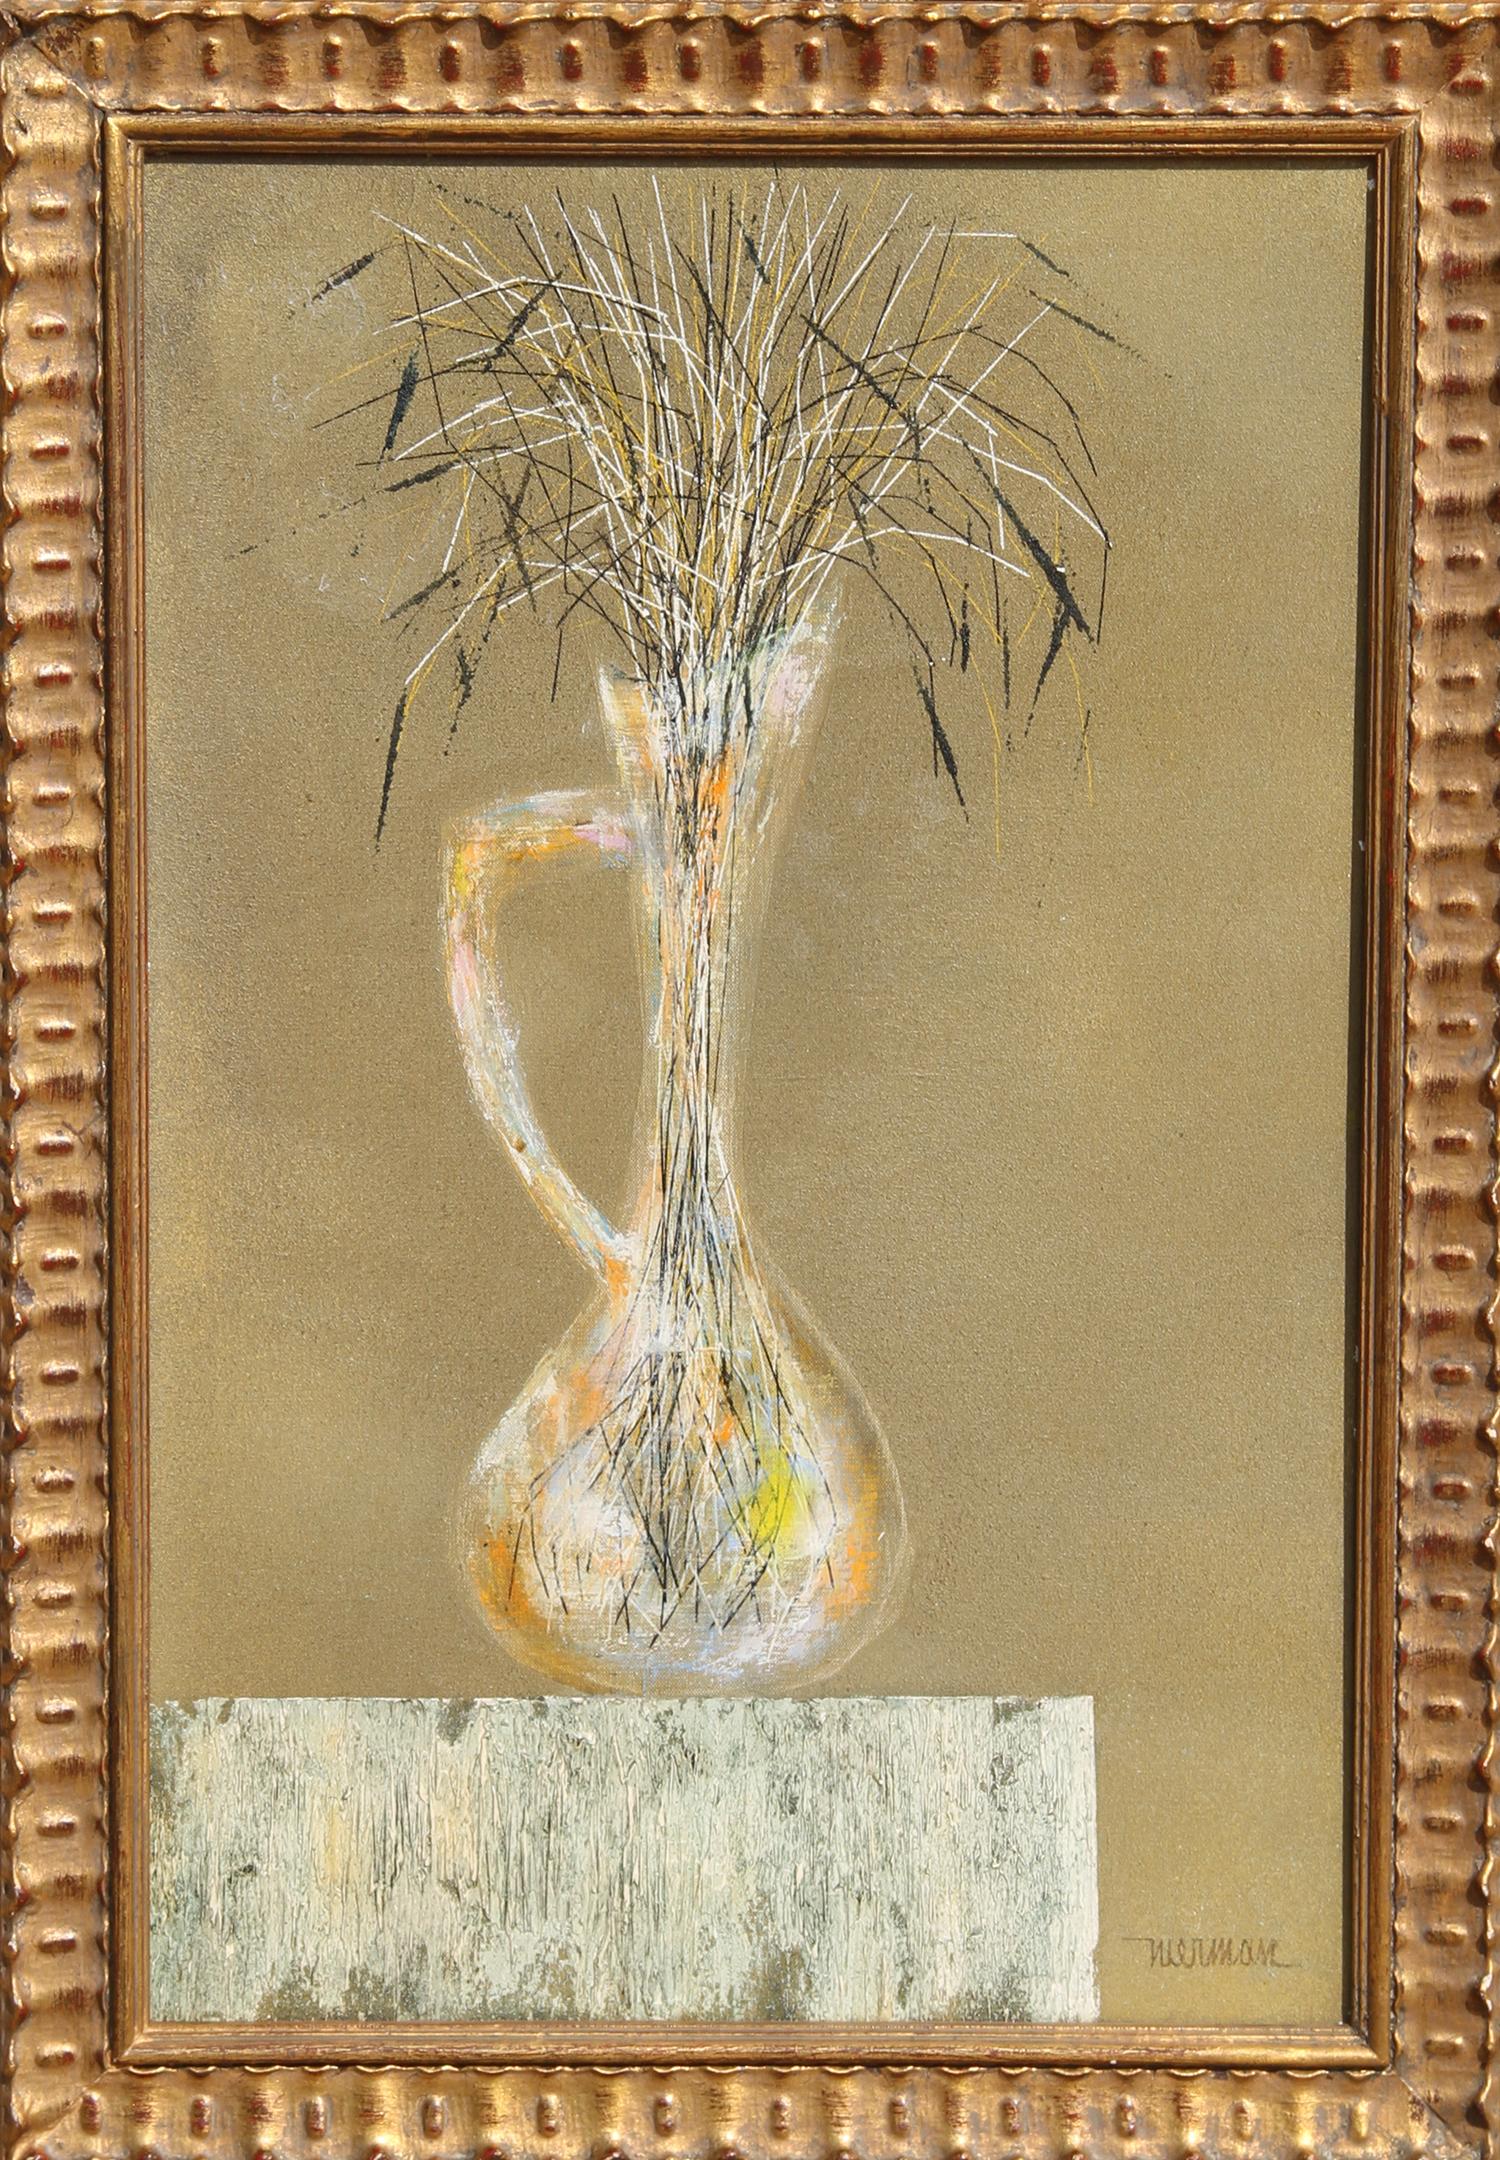 Artist: Leonardo Nierman, Mexican (1932 - )
Title: Flower Vase
Year: circa 1950
Medium: Oil on Canvas, signed l.r.
Size: 21.5 in. x 14 in. (54.61 cm x 35.56 cm)
Frame Size: 24.5 x 17 inches